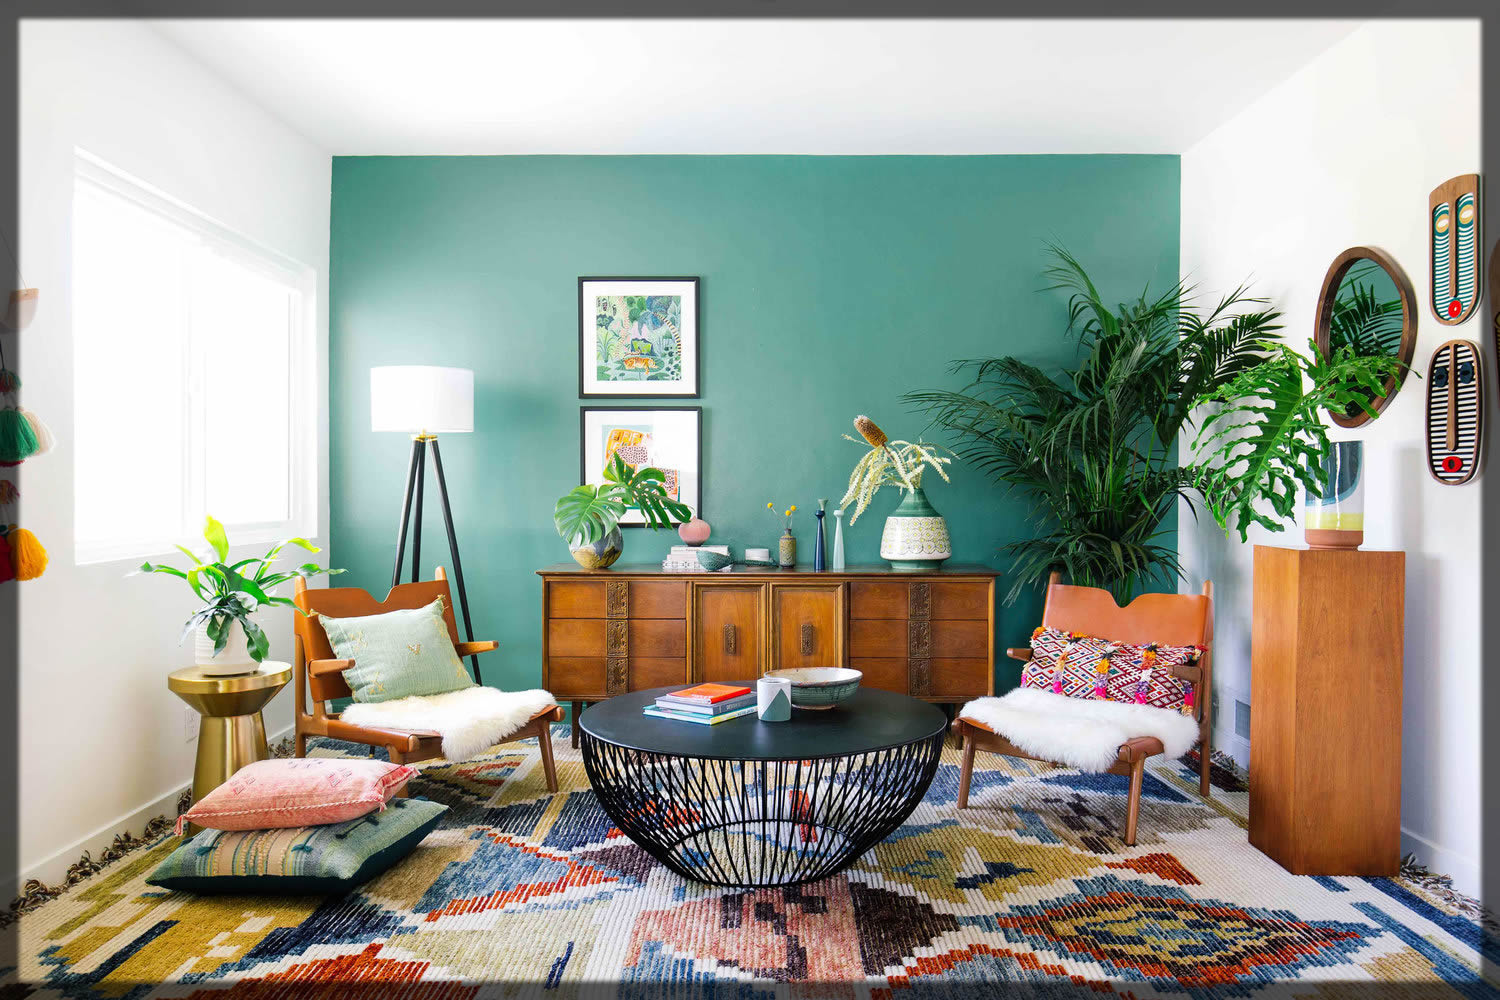 greenry living room design